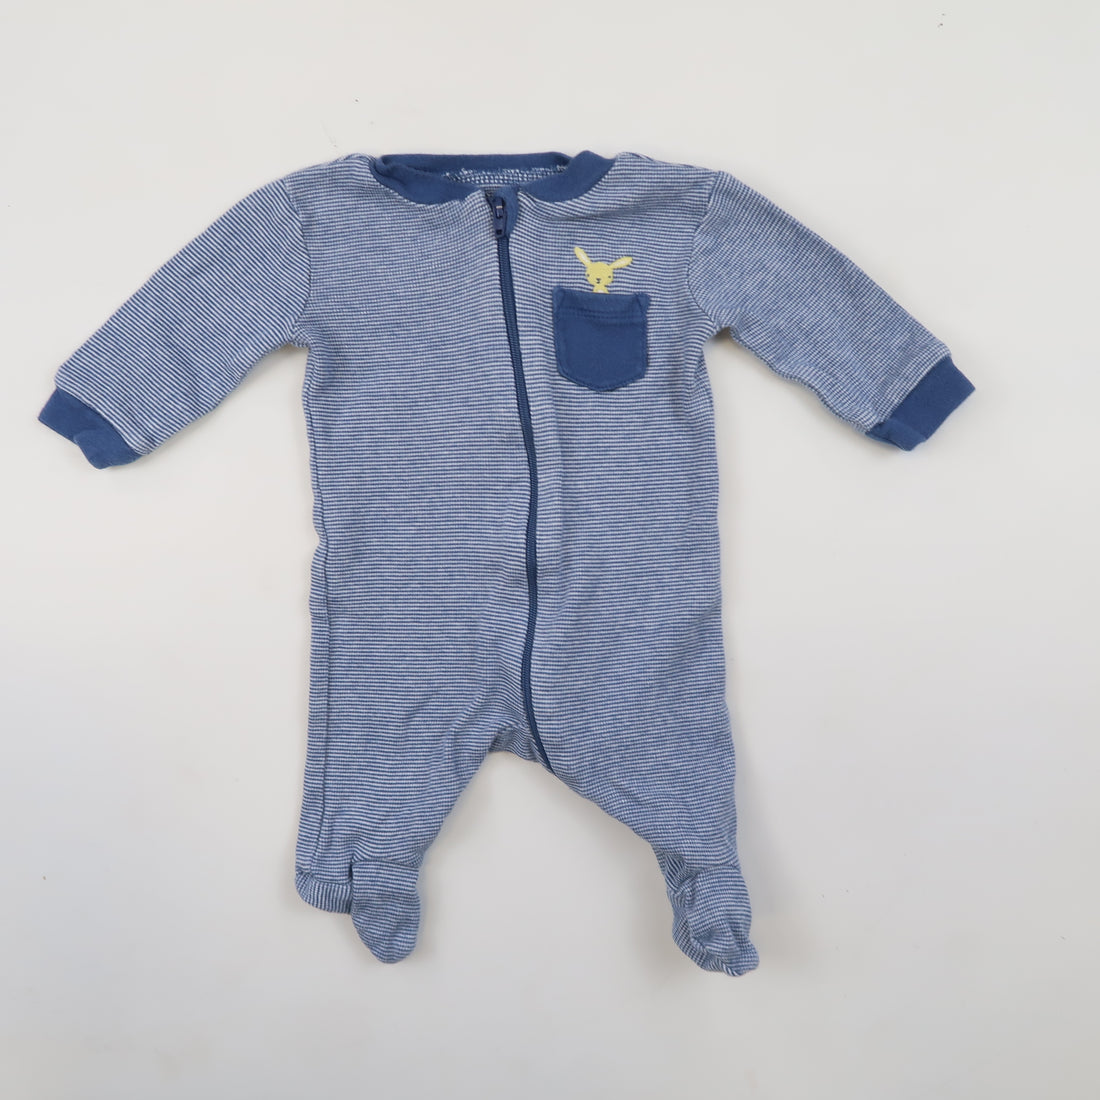 George - Sleepwear (Newborn)